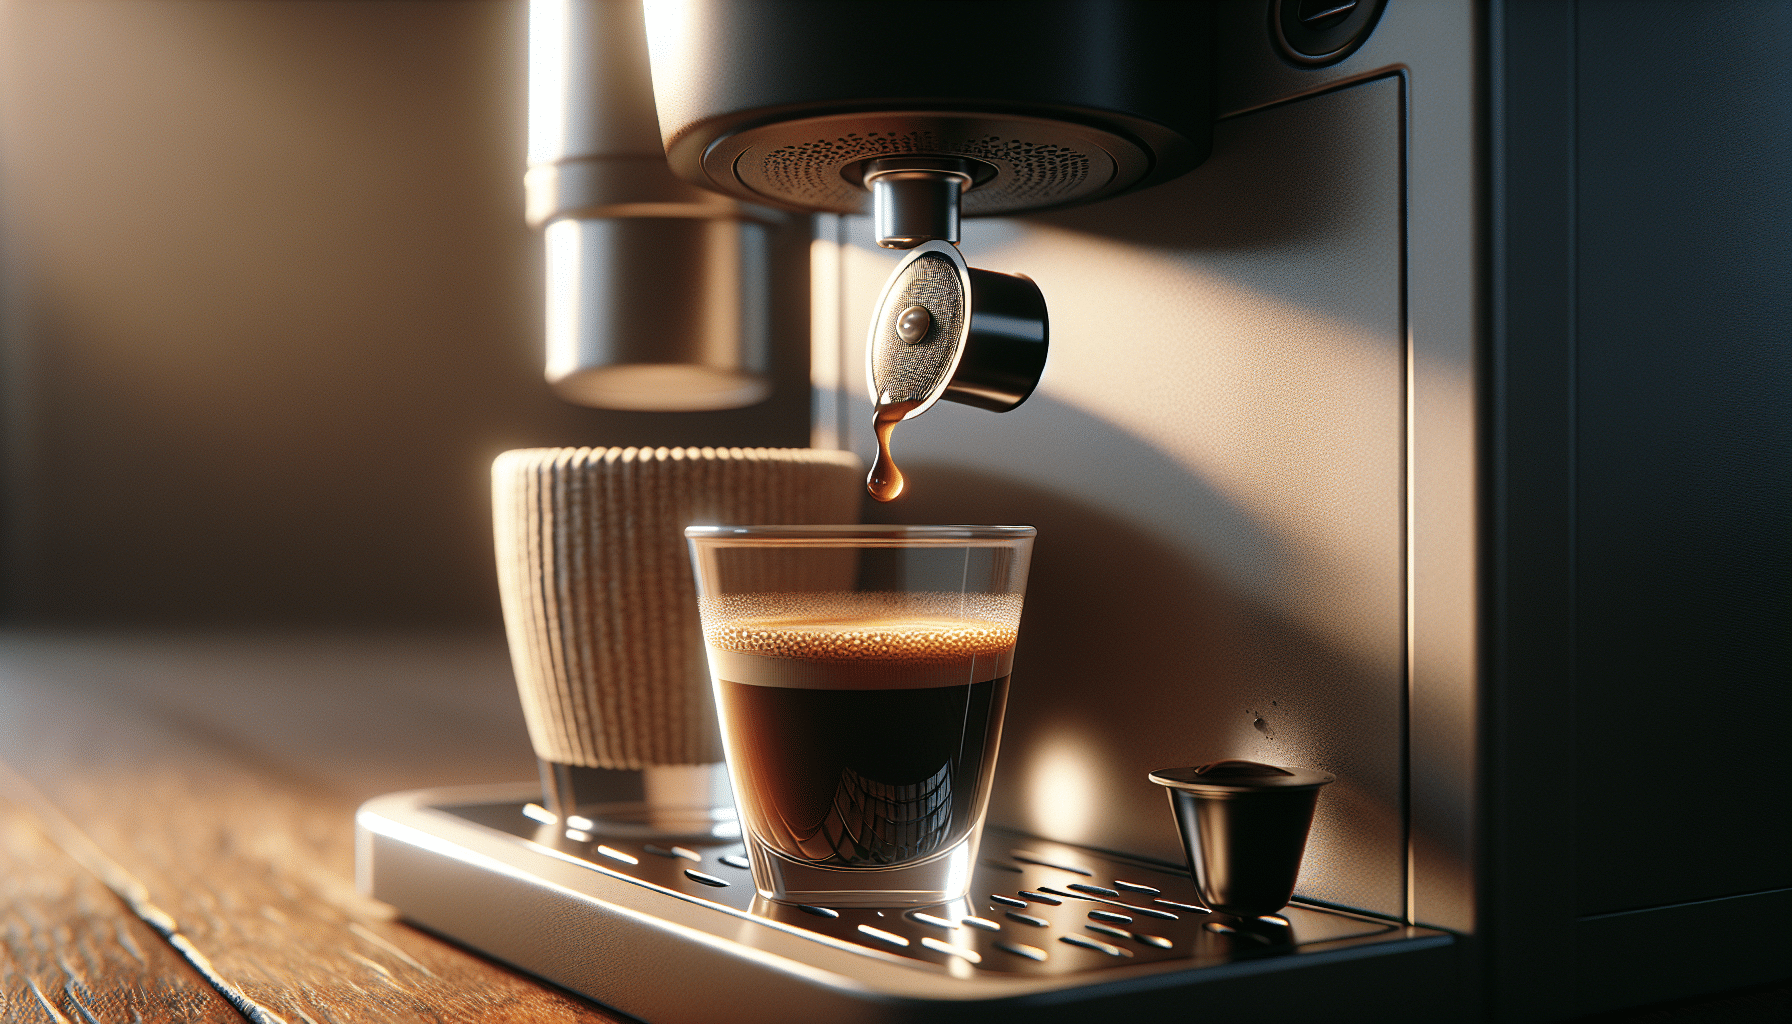 Perfectly aligned coffee pod insertion into nescafe machine